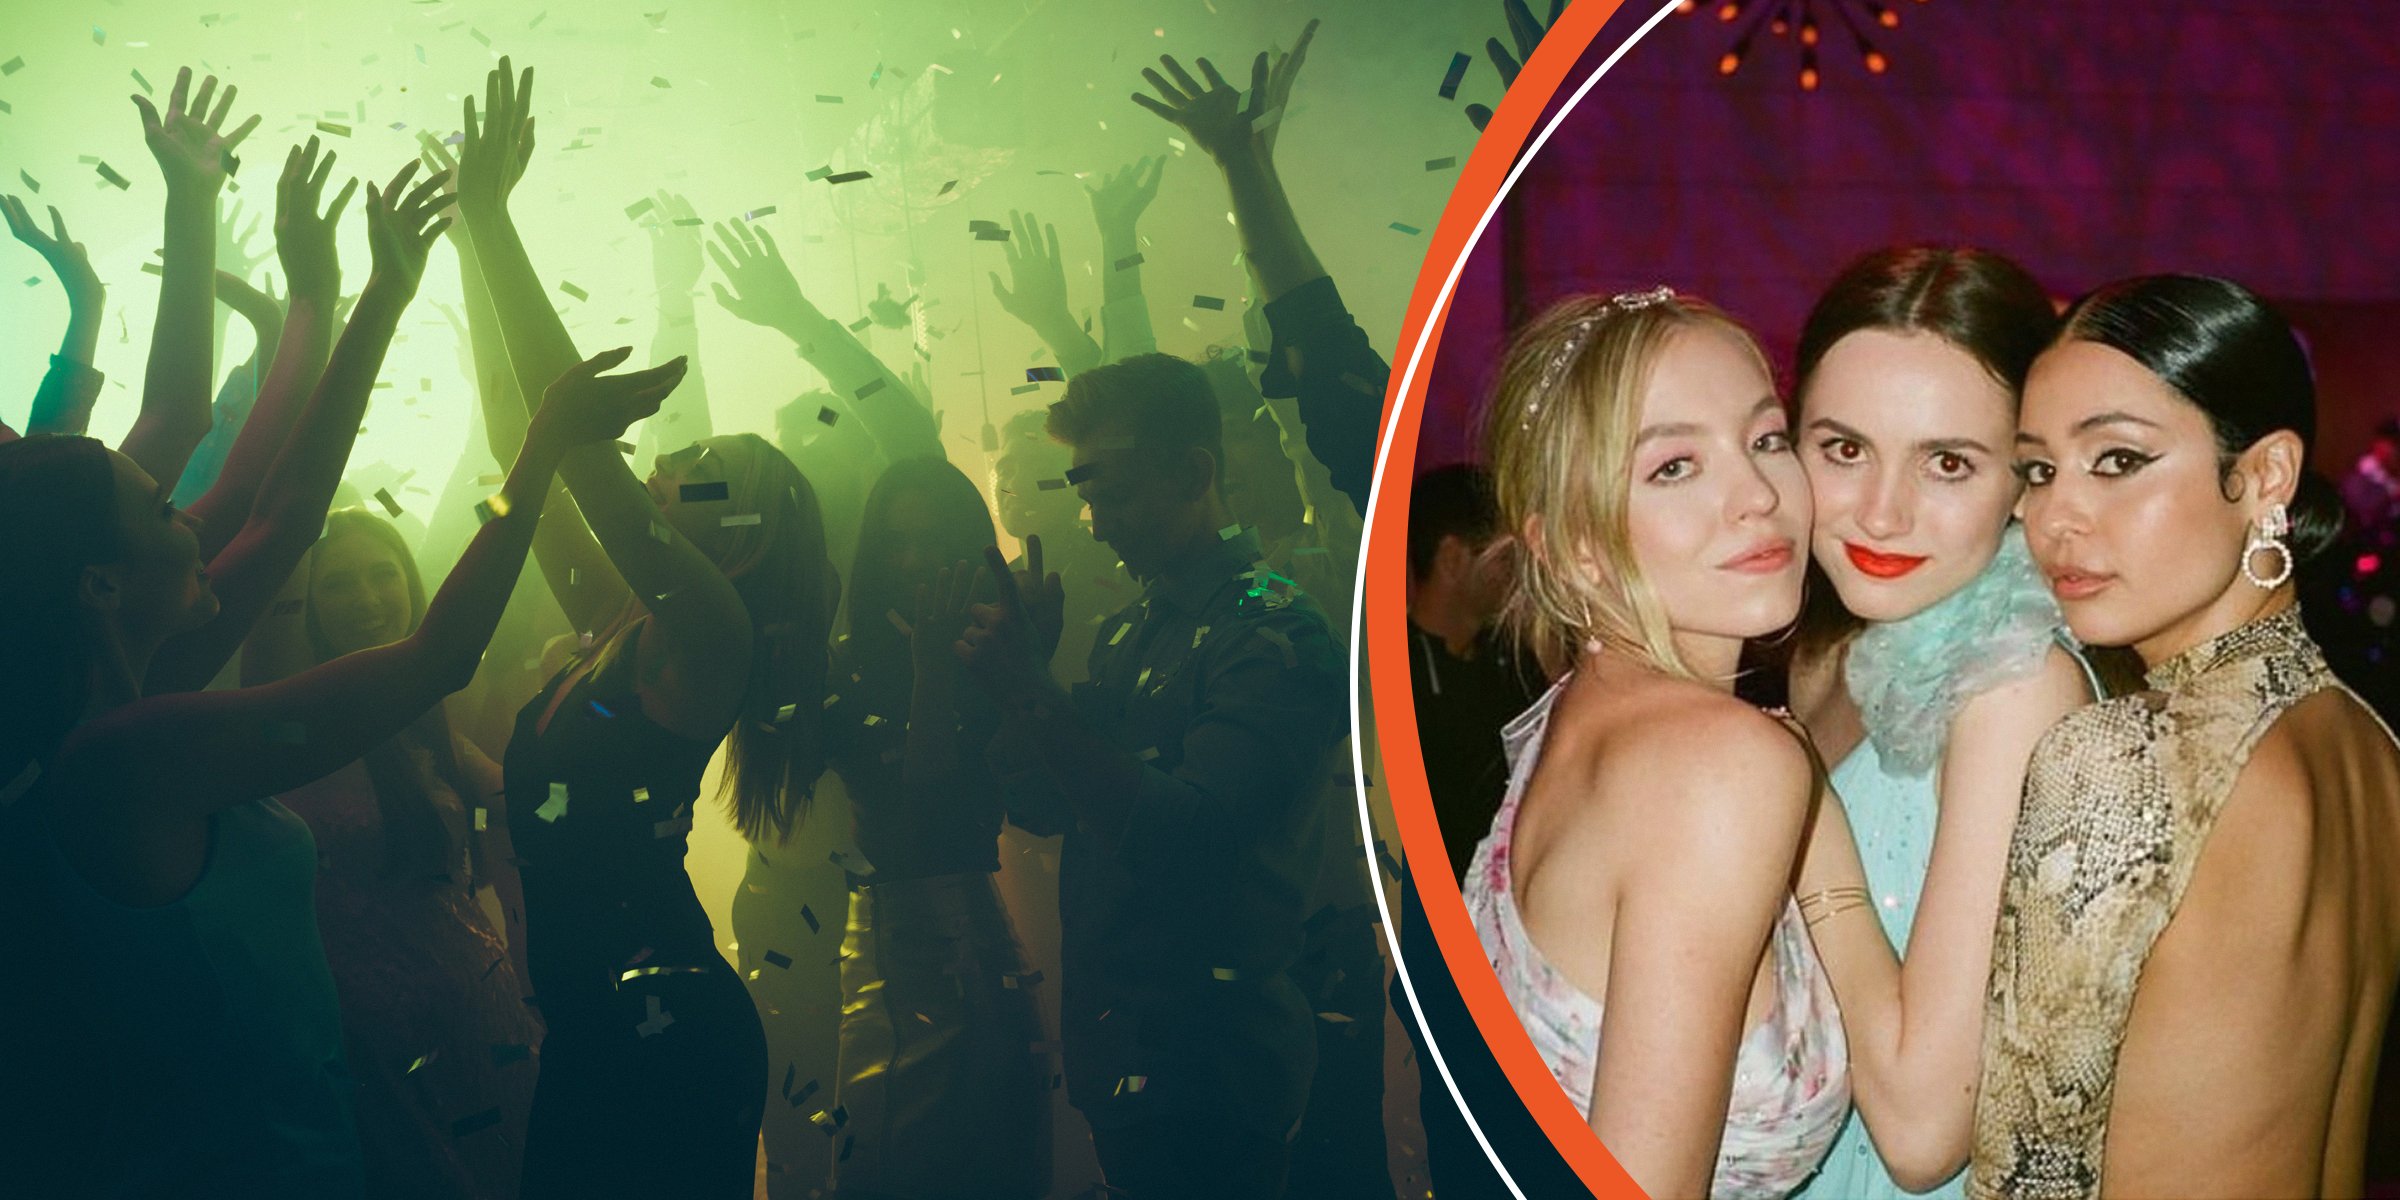 Party scene | Sydney Sweeney, Maude Apatow, and Alexa Demie | Source: Shutterstock | Instagram.com/euphoria